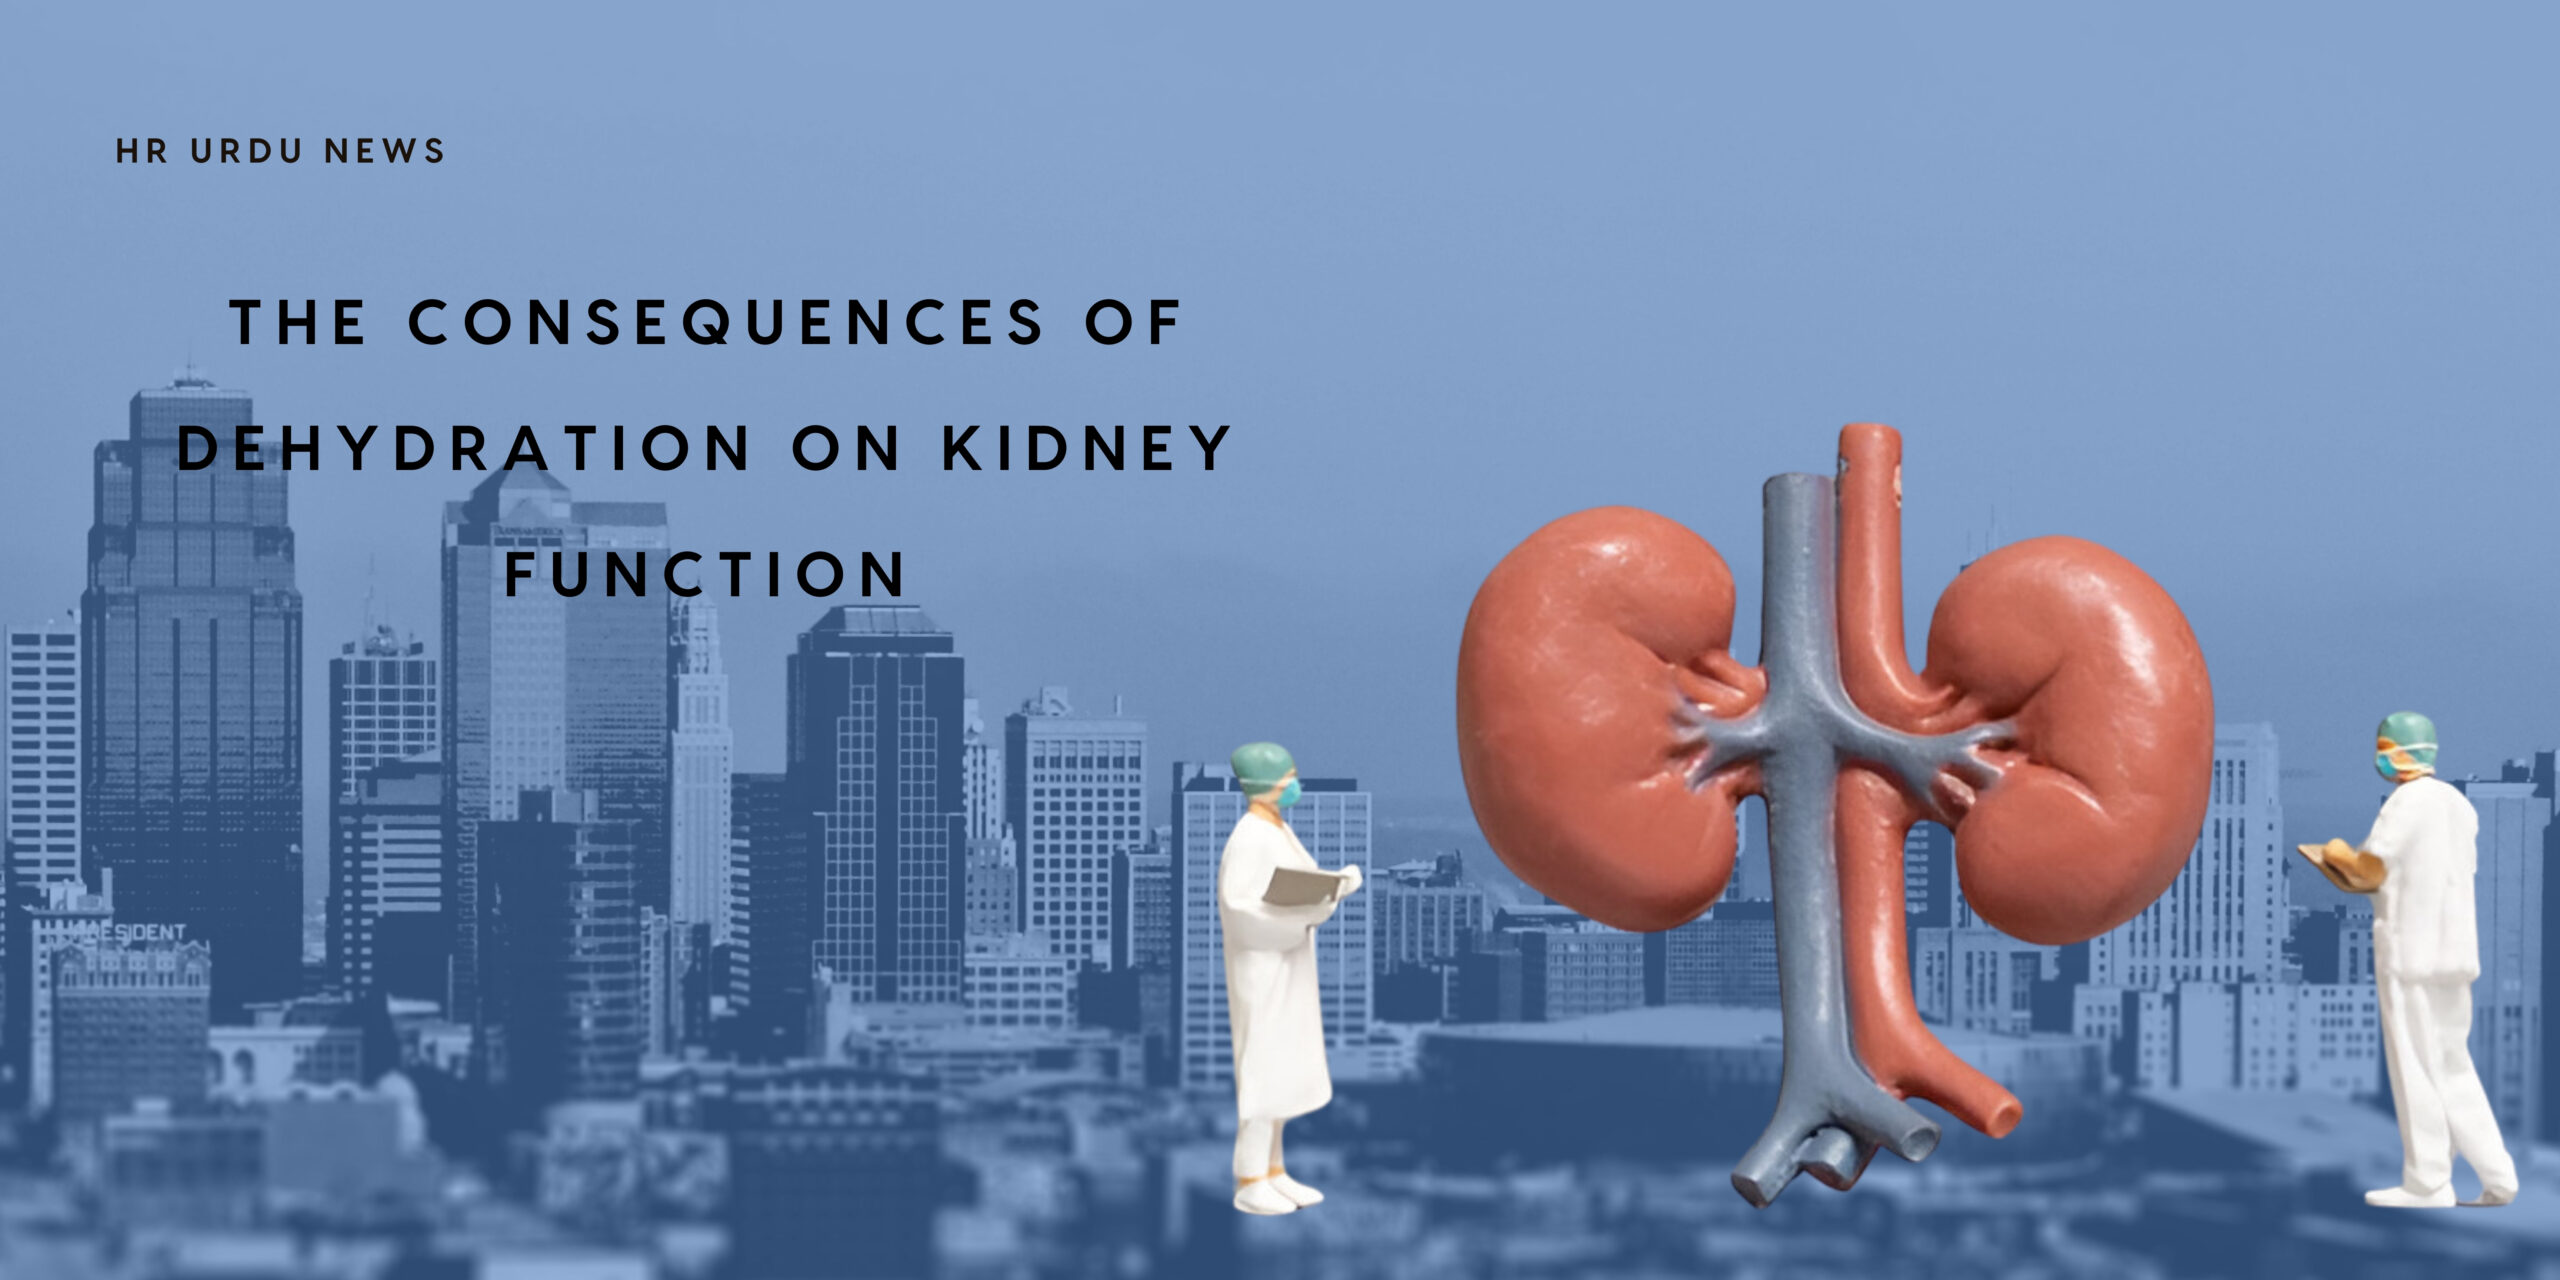 Kidney Function